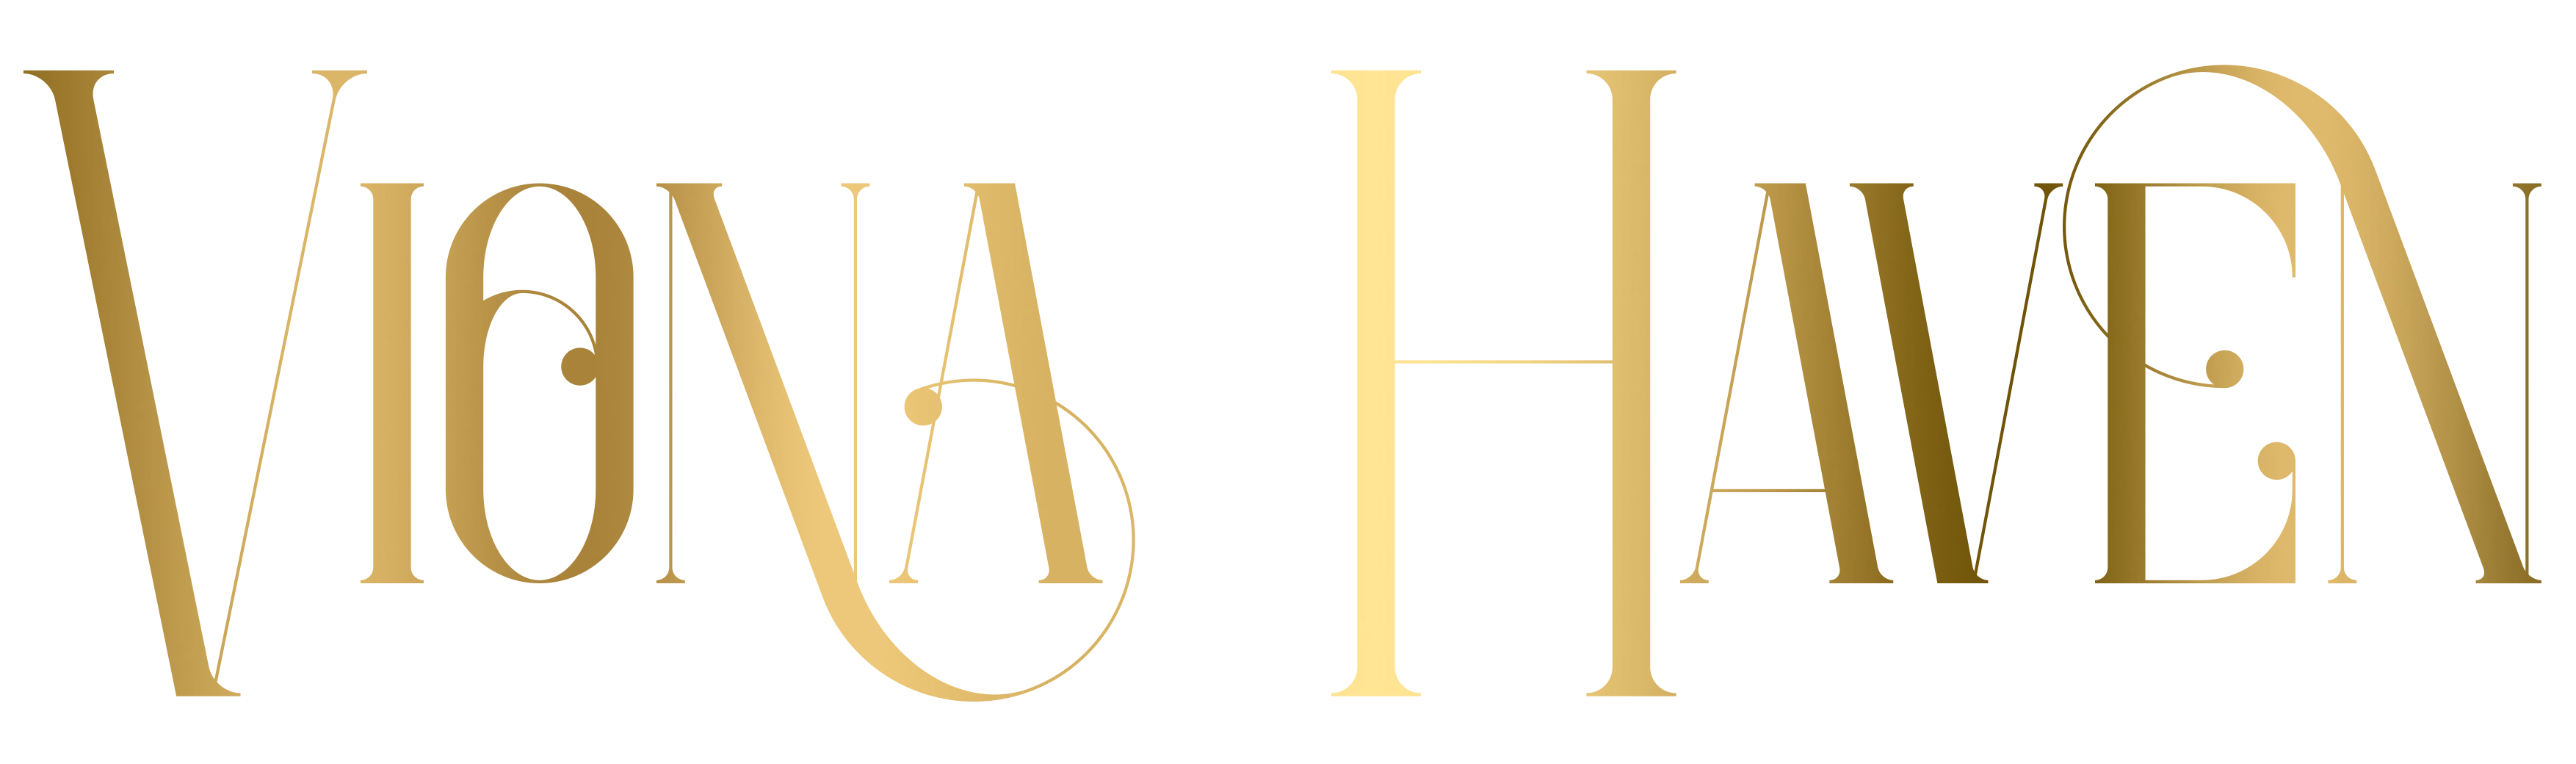 Viona Haven logo